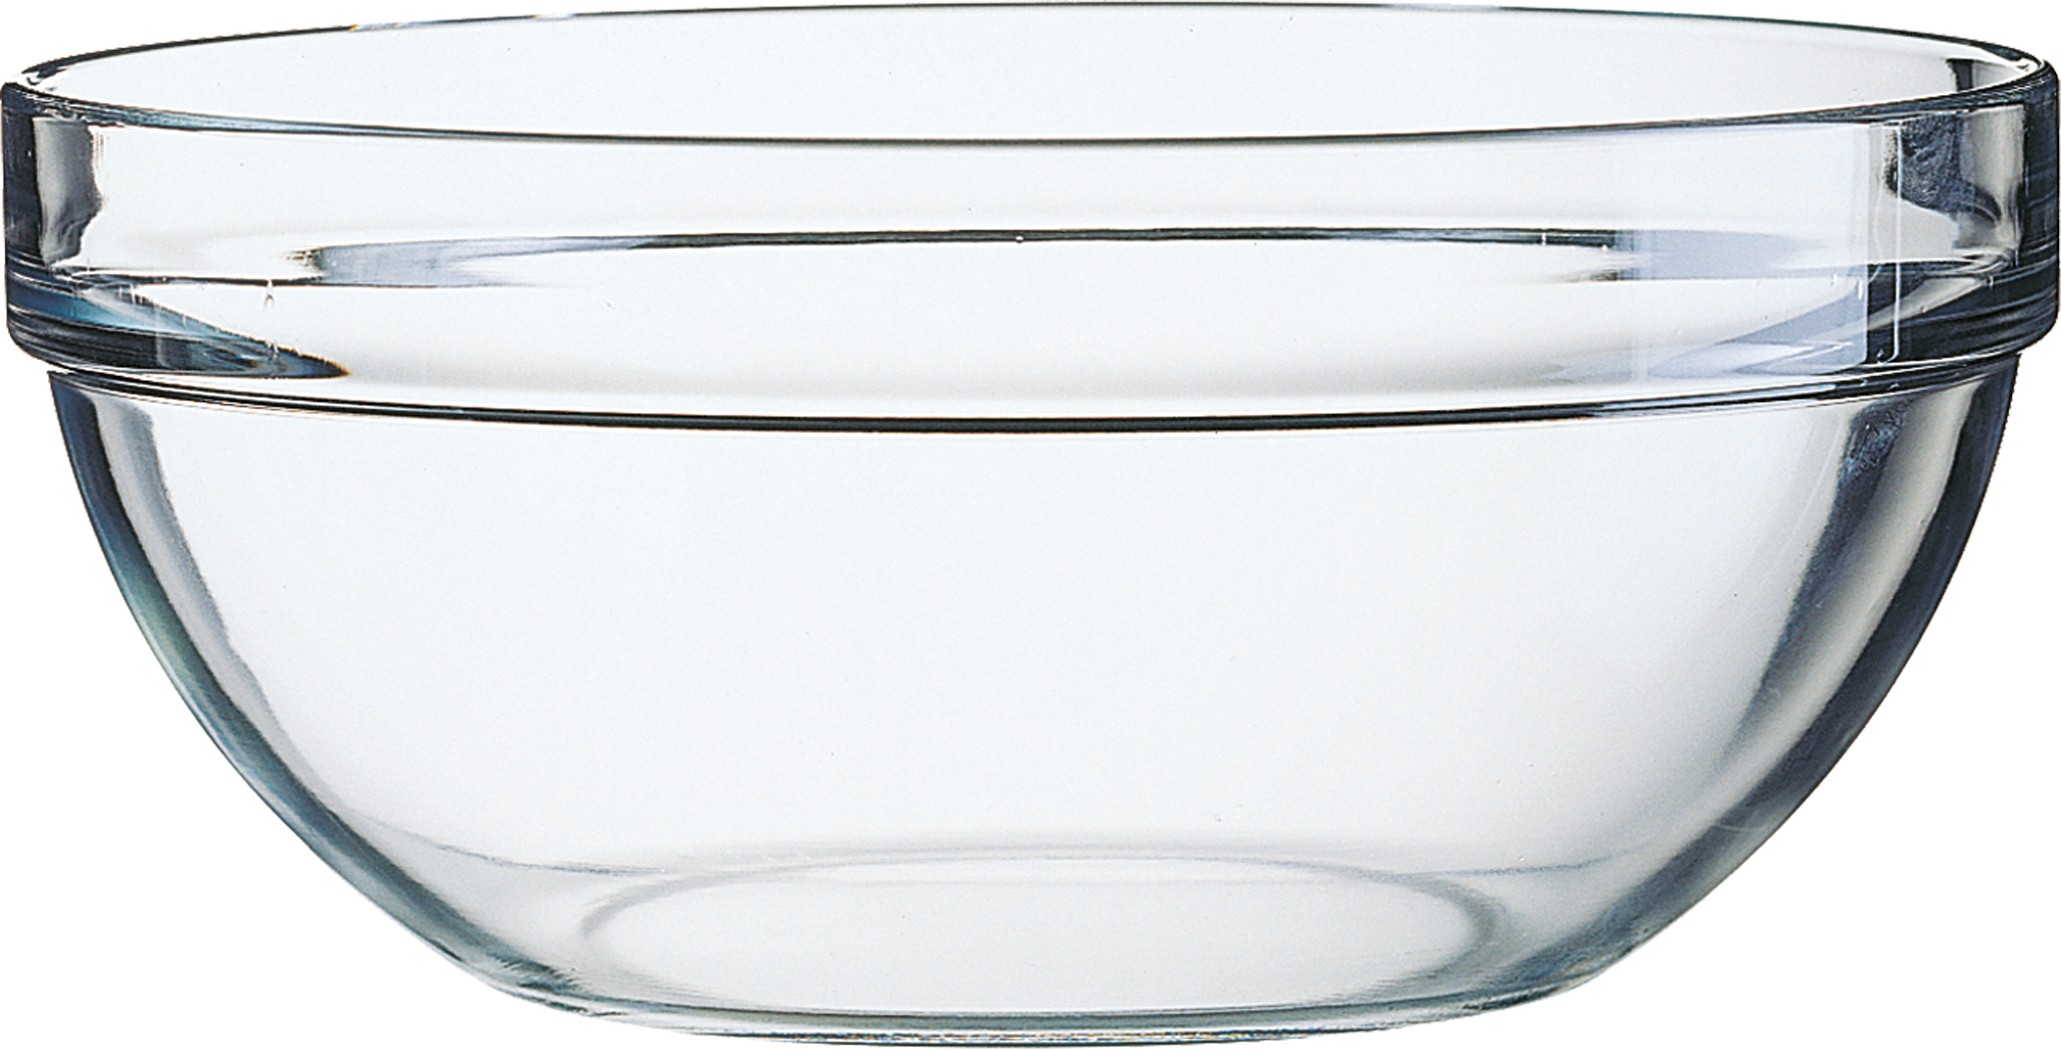 Glasschale EMPILABLE, Inhalt: 4,5 Liter Durchmesser: 260 mm, Höhe: 119 mm, stapelbar